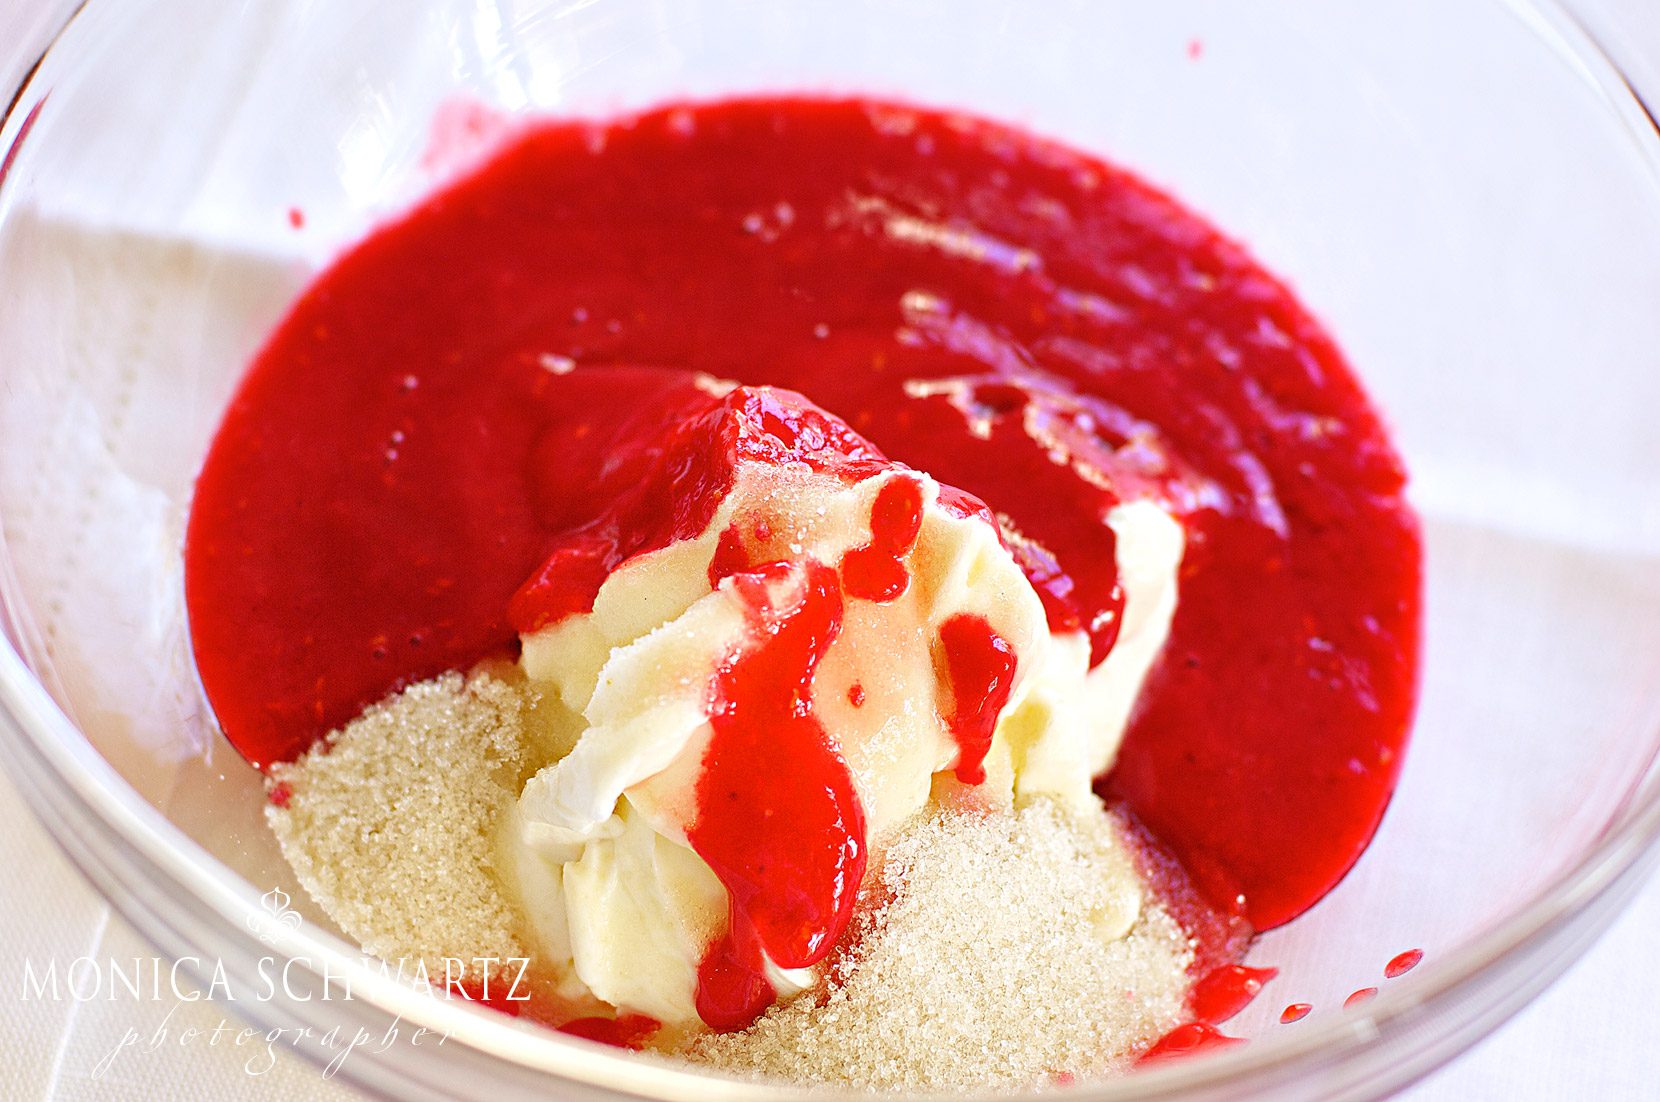 Blending-mascarpone-sugar-and-raspberry-puree-to-make-rasperry-tiramisu-dessert-recipe